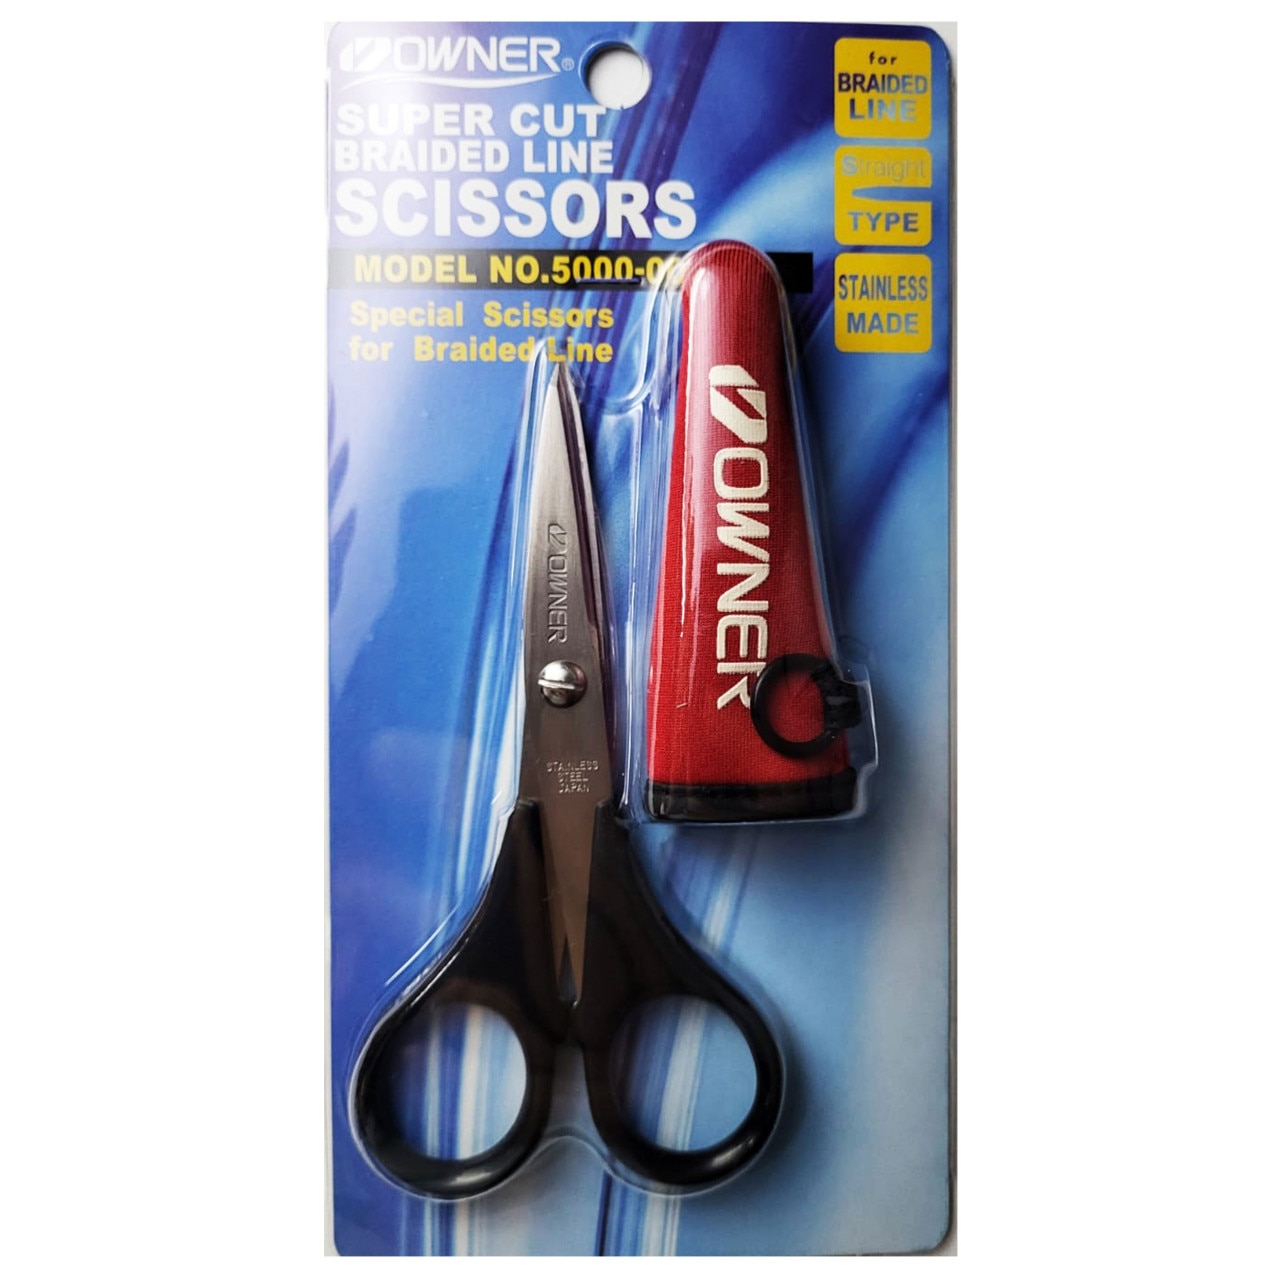 Owner Super Cut Braid Scissors